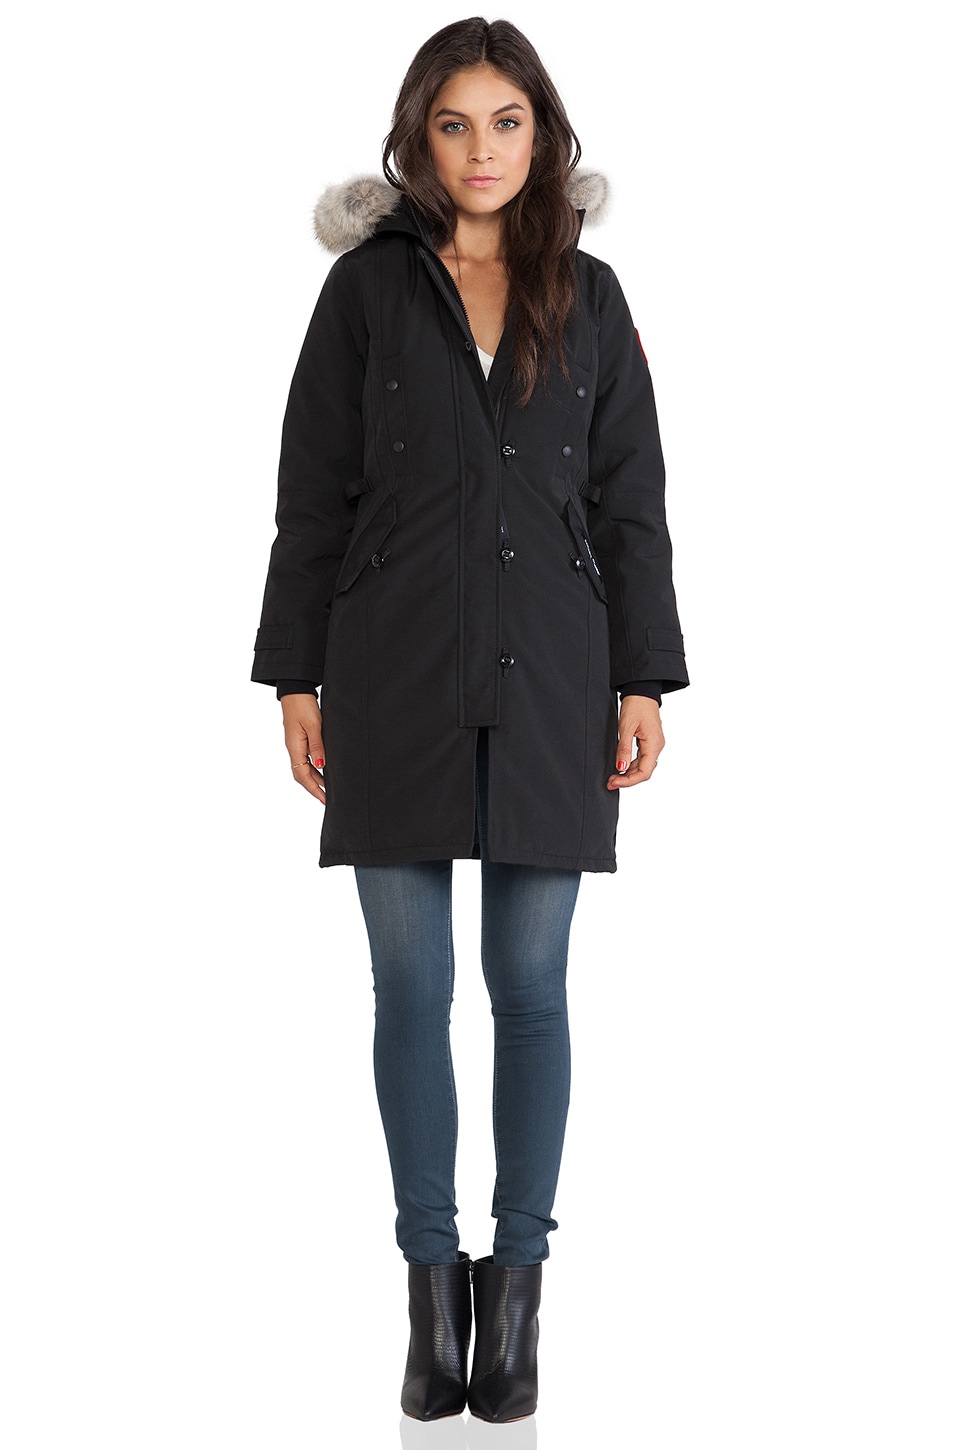 Canada Goose jackets online price - Canada Goose Kensington Parka with Coyote Fur Trim in Black | REVOLVE